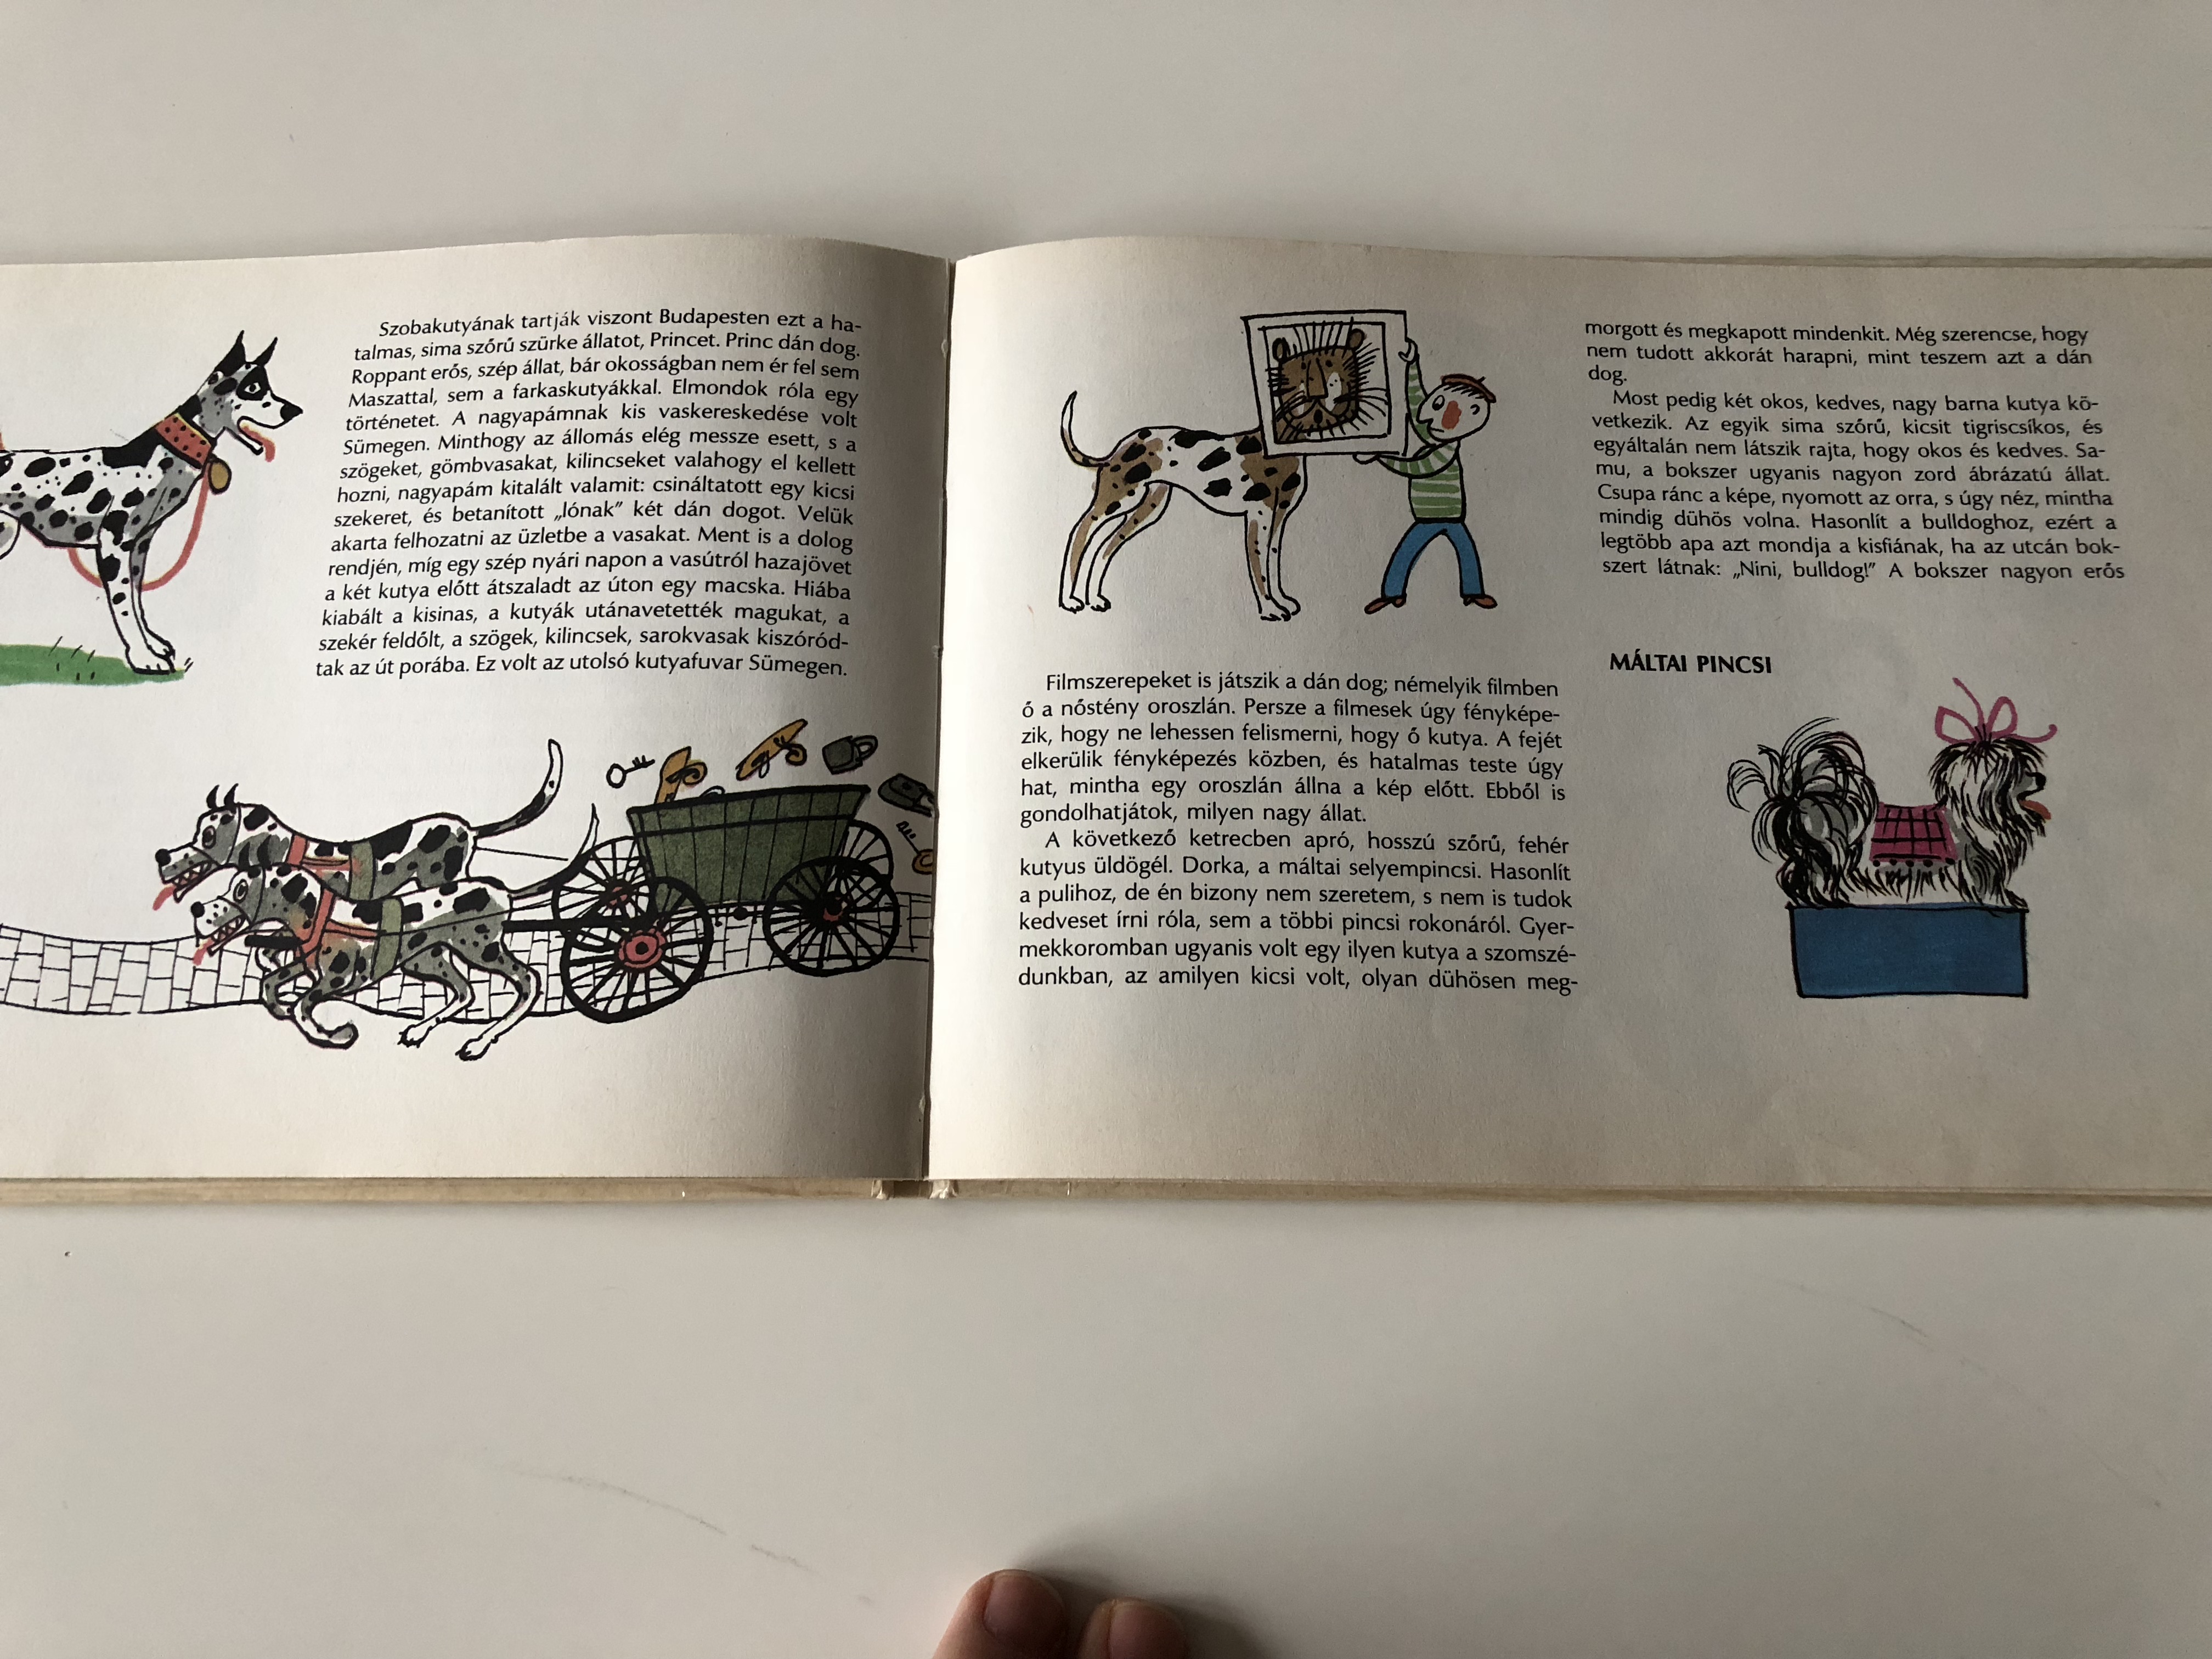 maszat-s-t-rsai-m-ra-1972-sz-sz-imre-maszat-and-friends-hungarian-childrens-storybook-about-dogs-hardcover.jpg